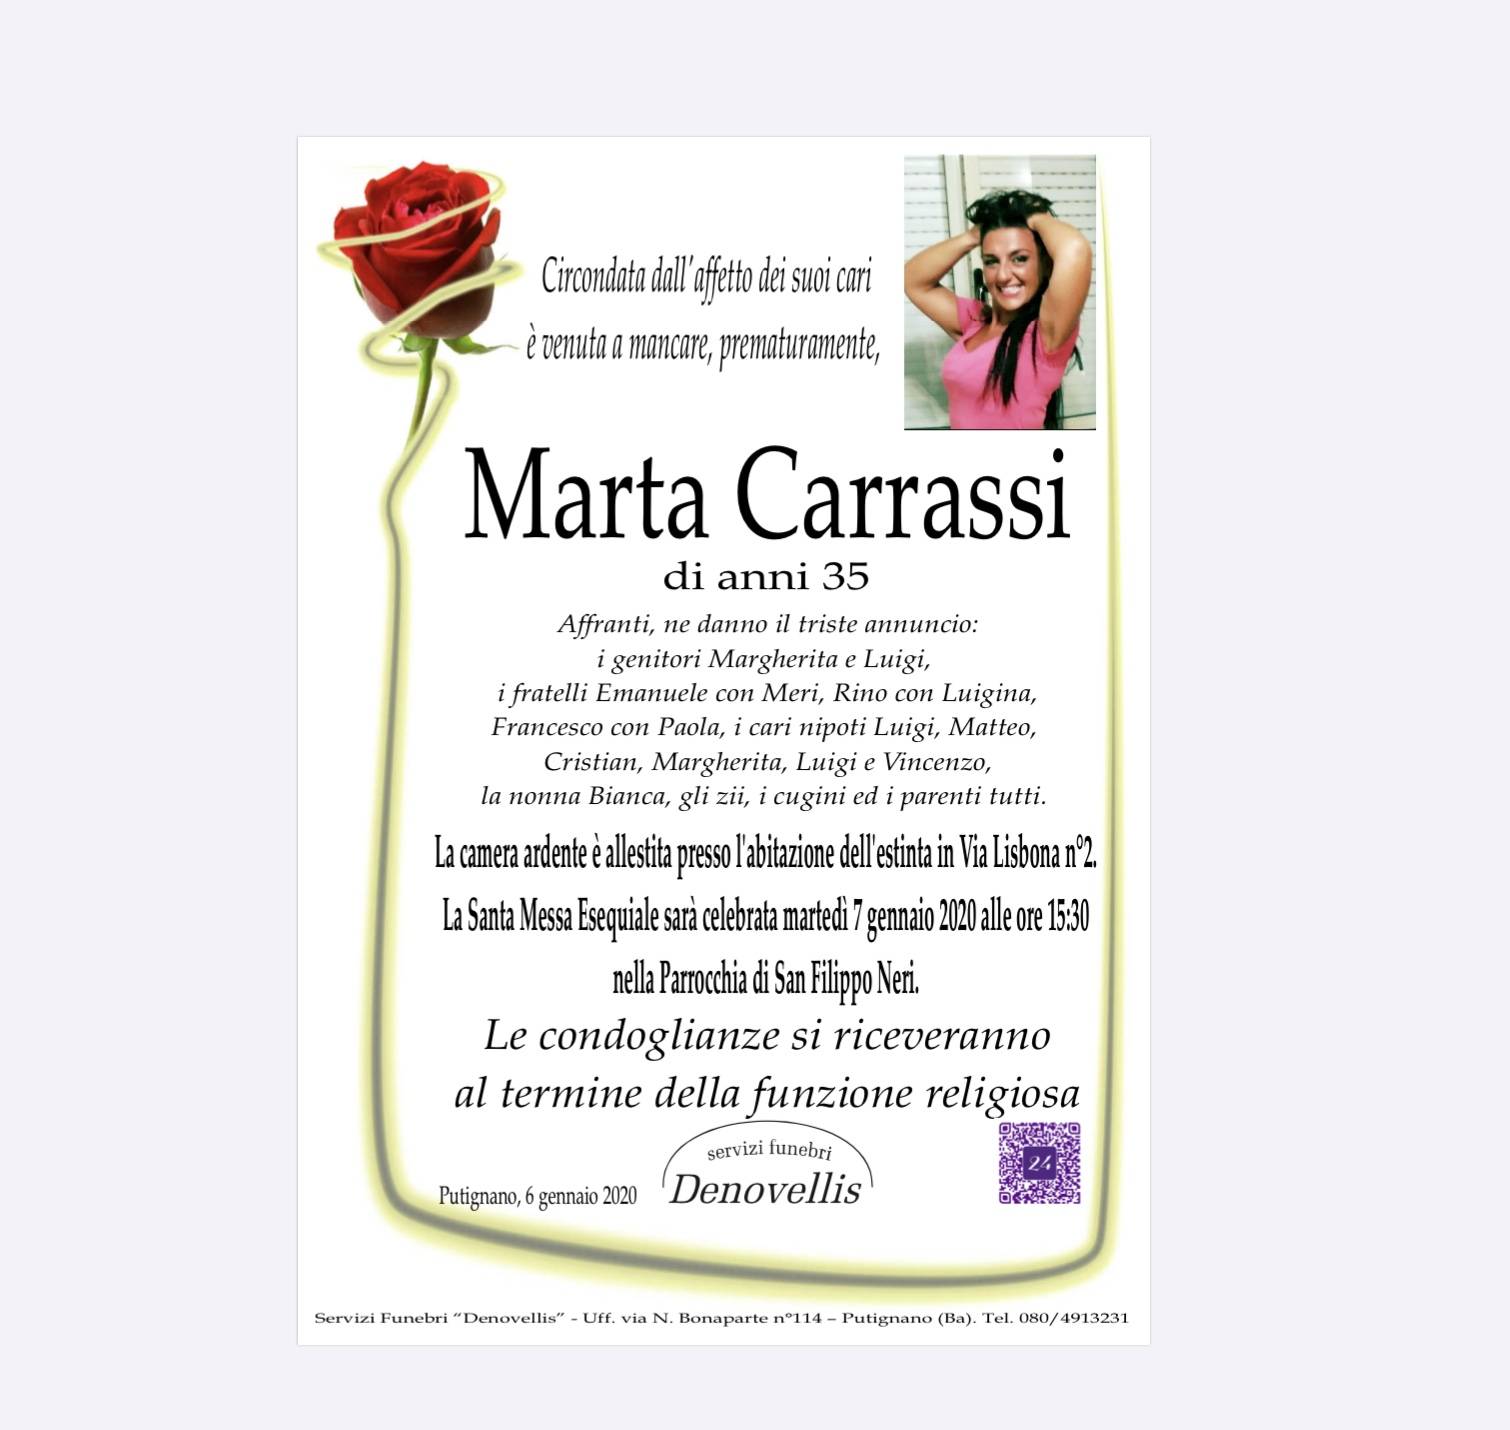 Marta Carrassi